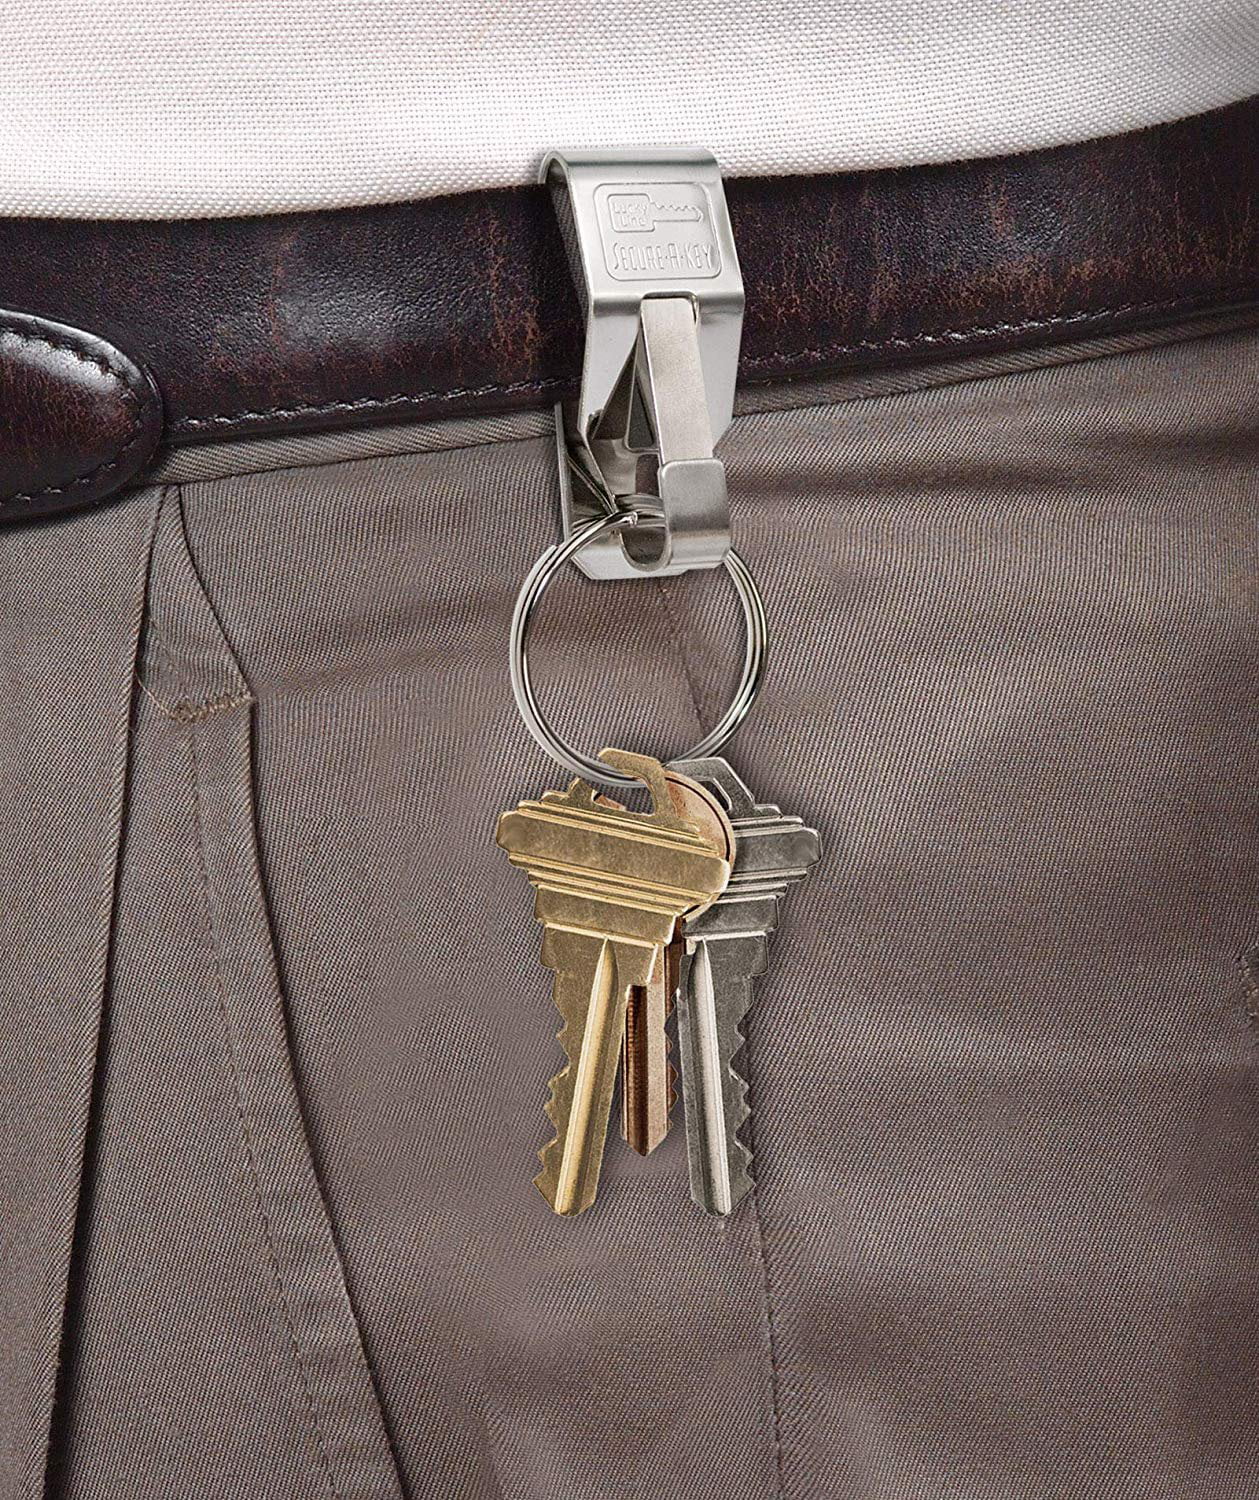 Secure-A-Key Belt Clip w/Key Ring